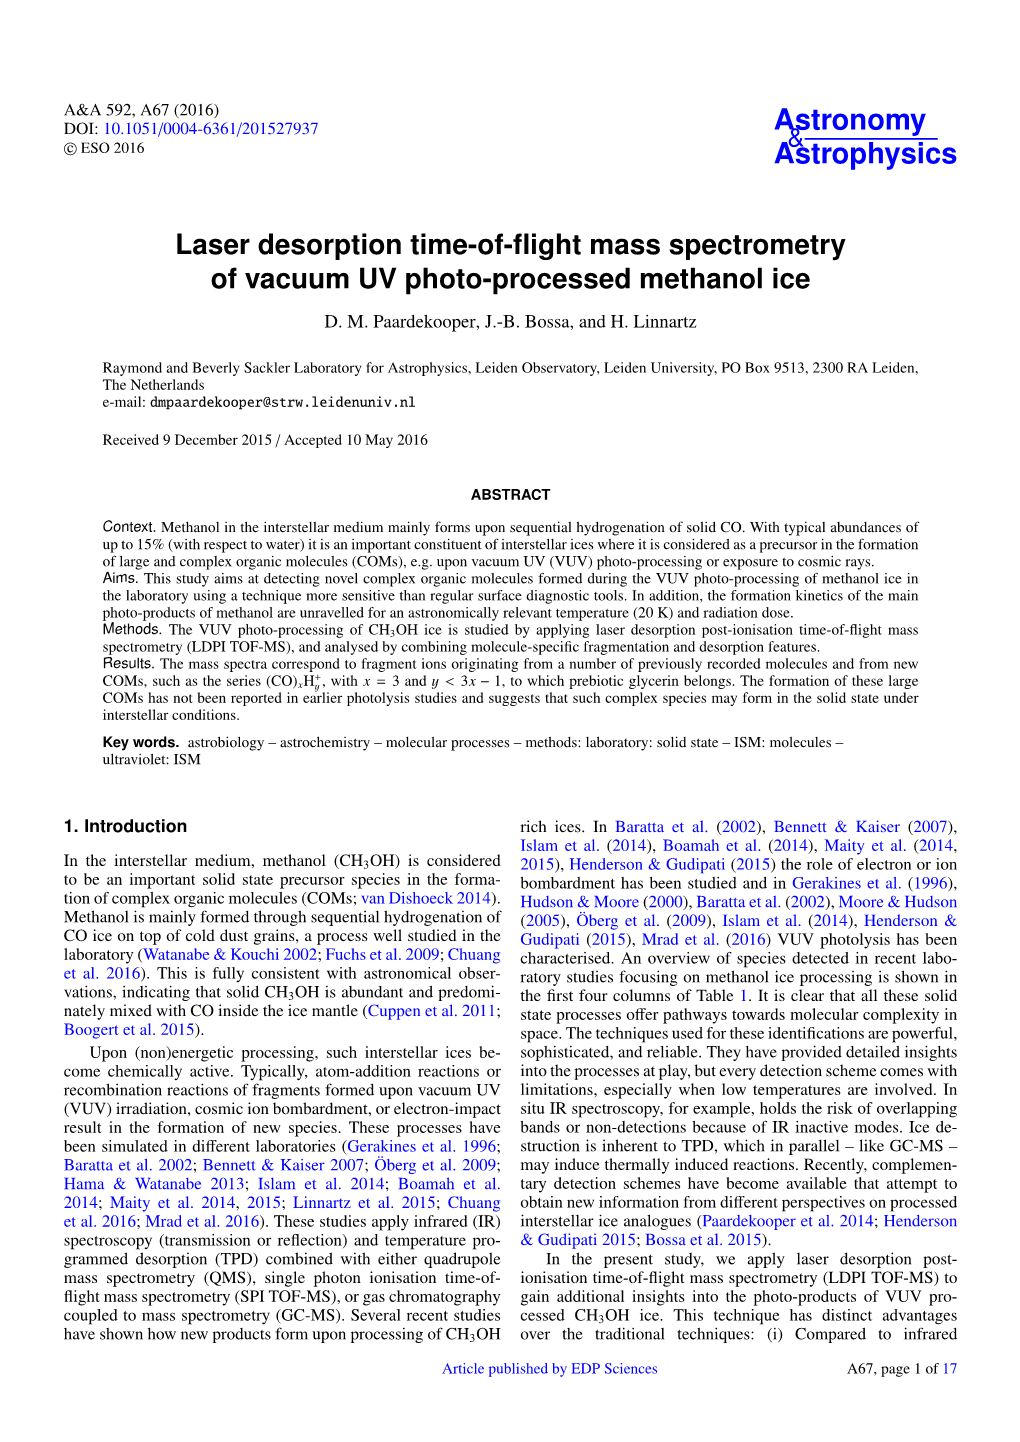 Laser Desorption Time-Of-Flight Mass Spectrometry of Vacuum UV Photo